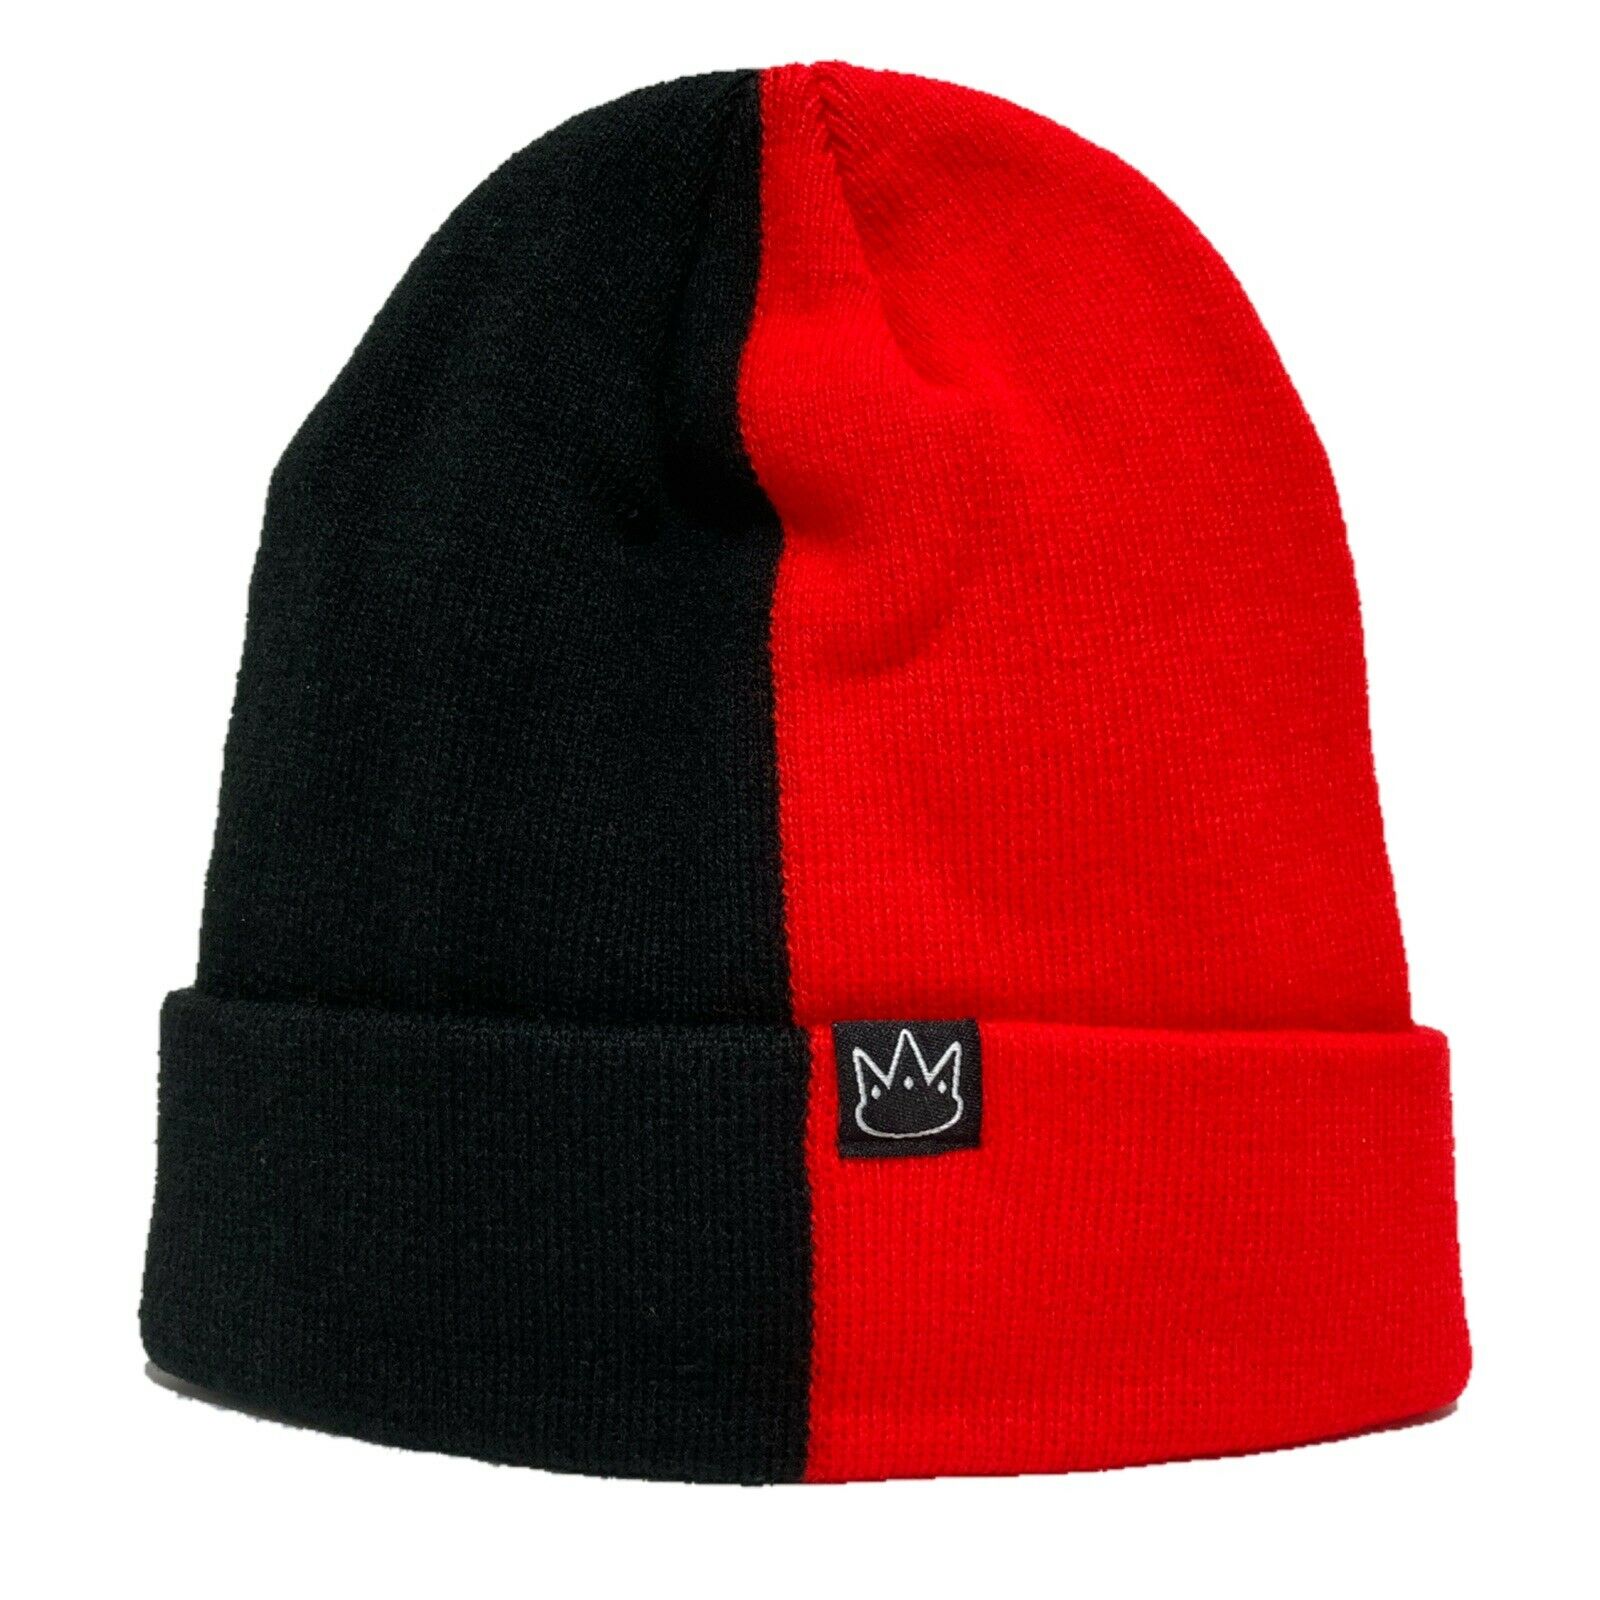 half black red beanie cap hat